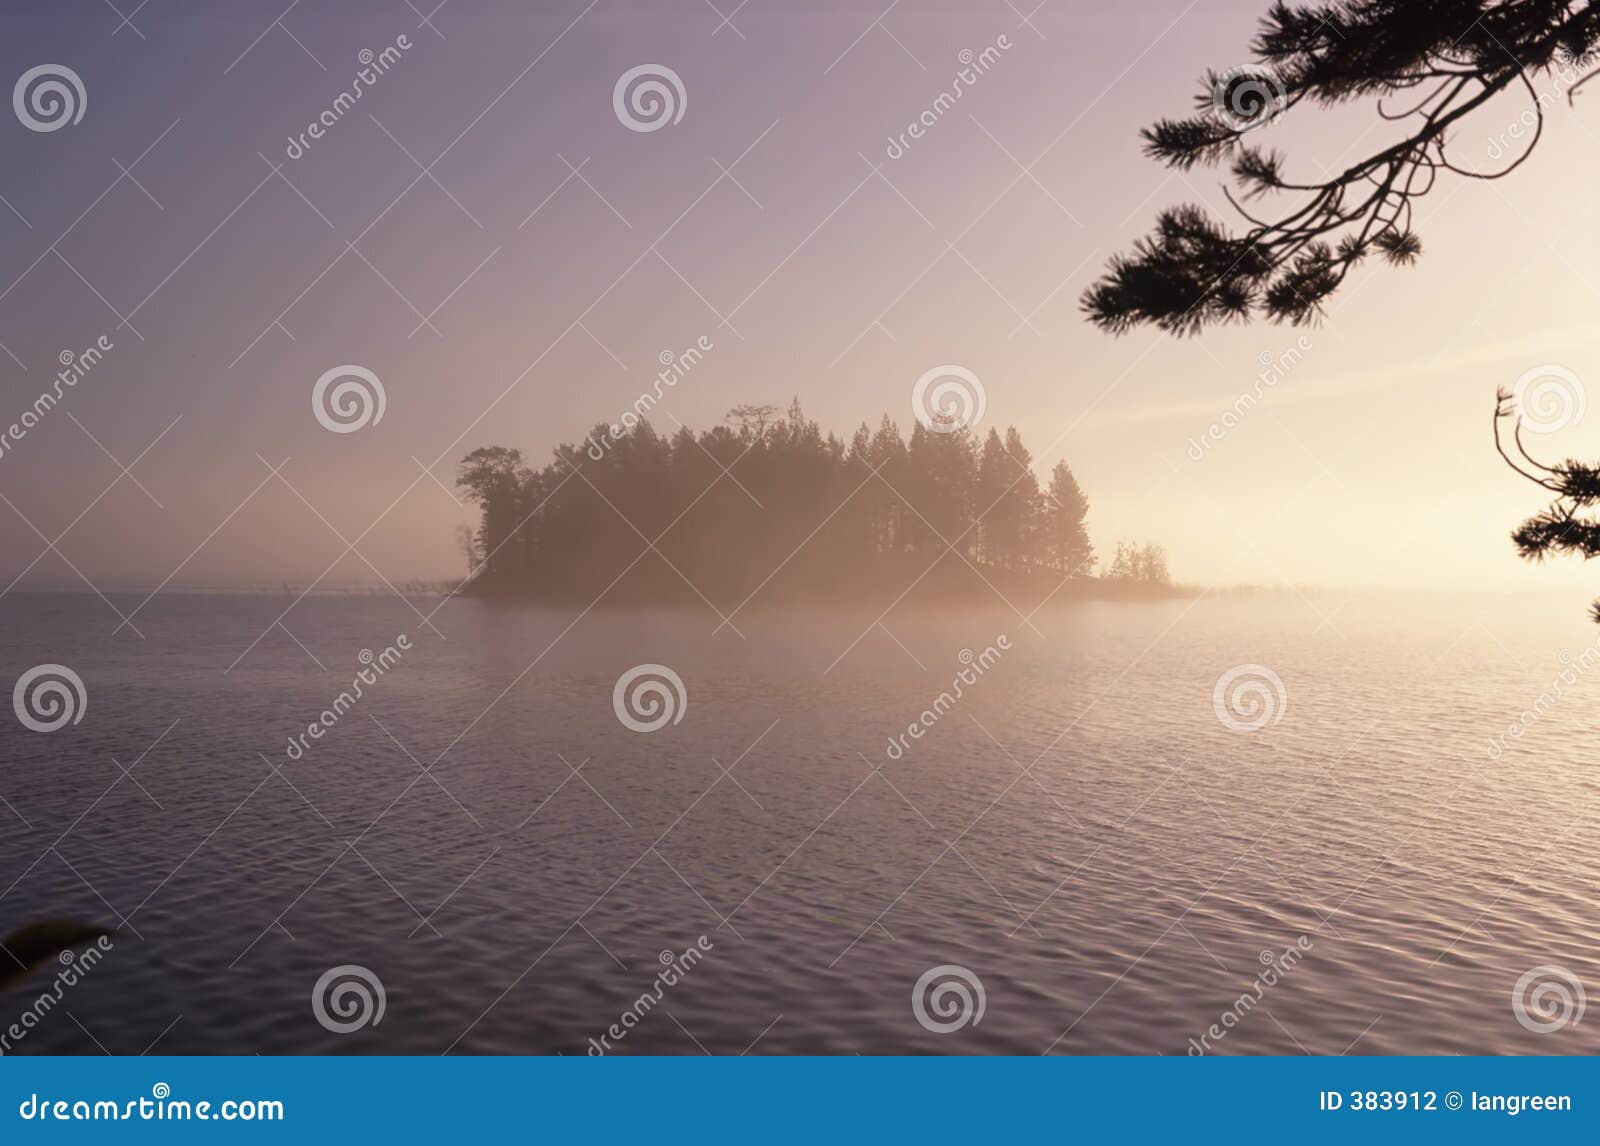 wooded island in lake